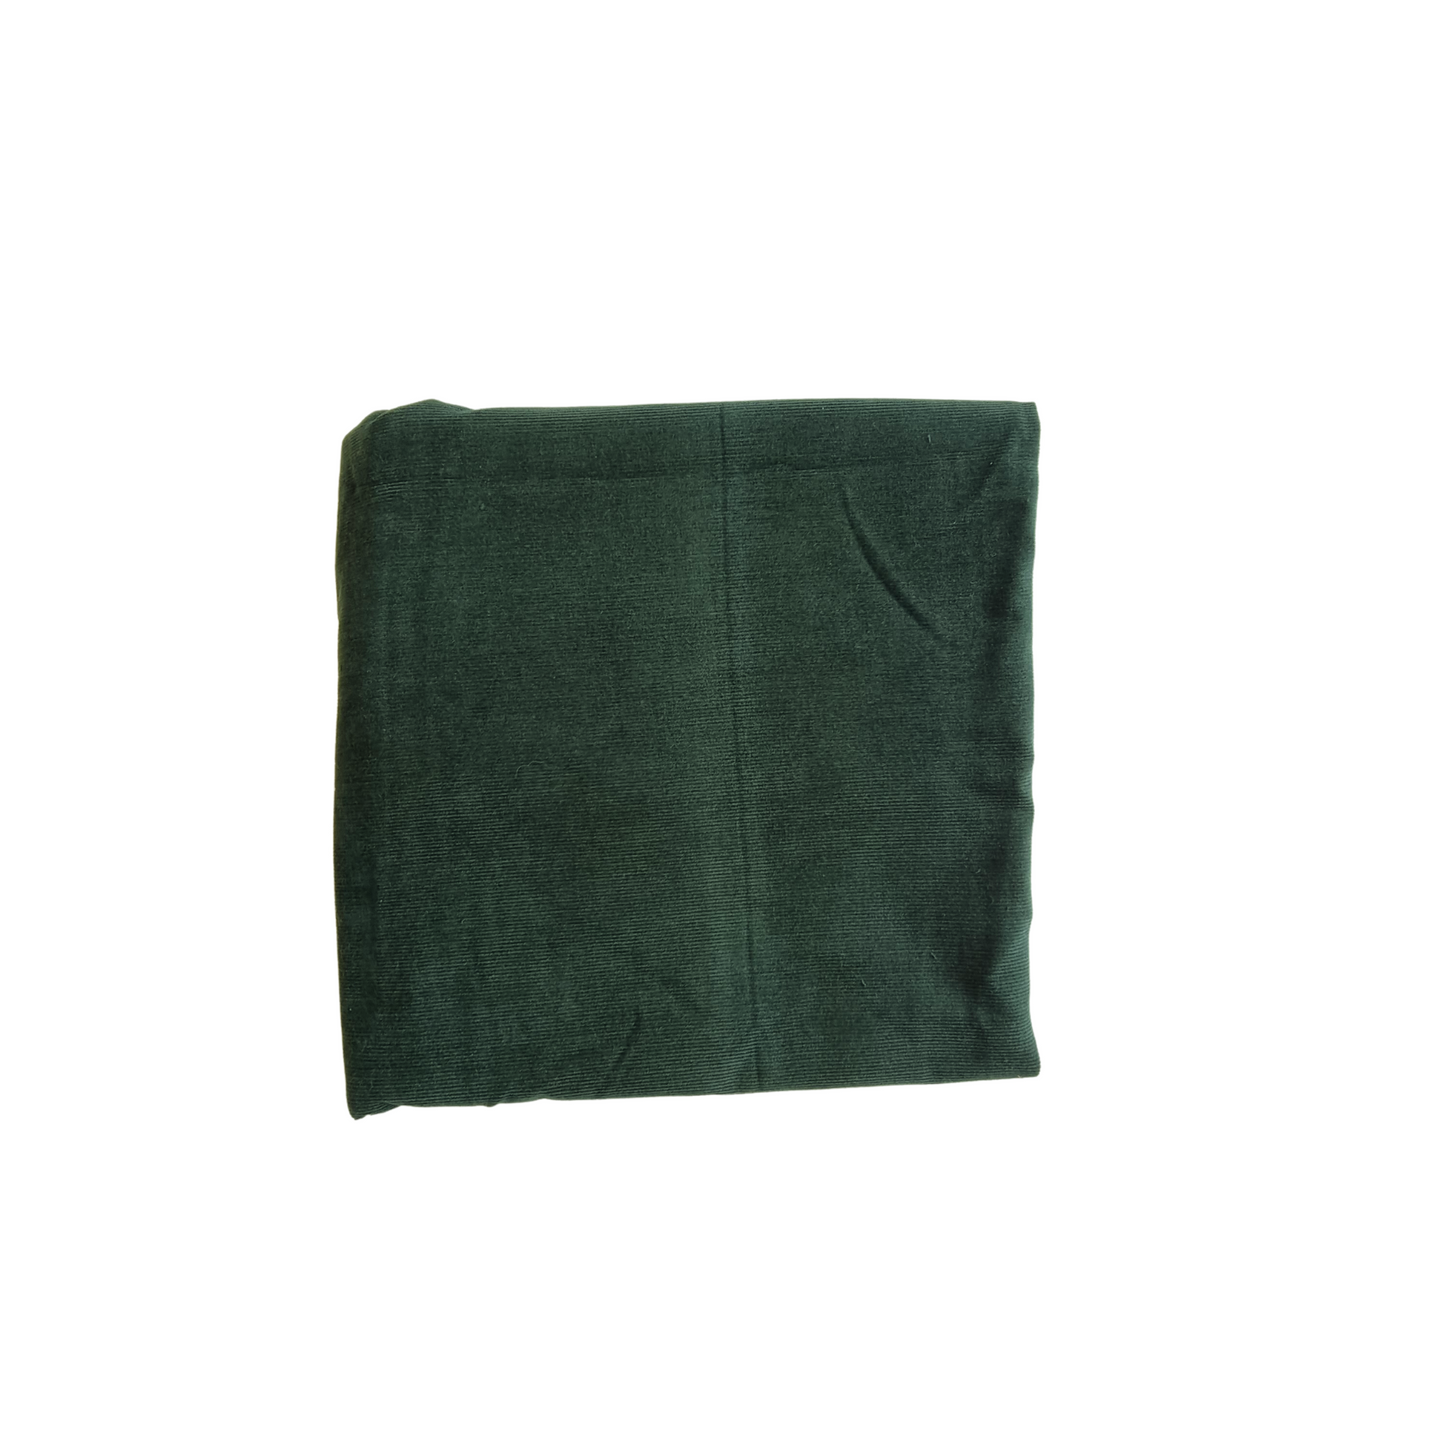 90 cm x 140 cm | Bottle Green Cotton Needlecord